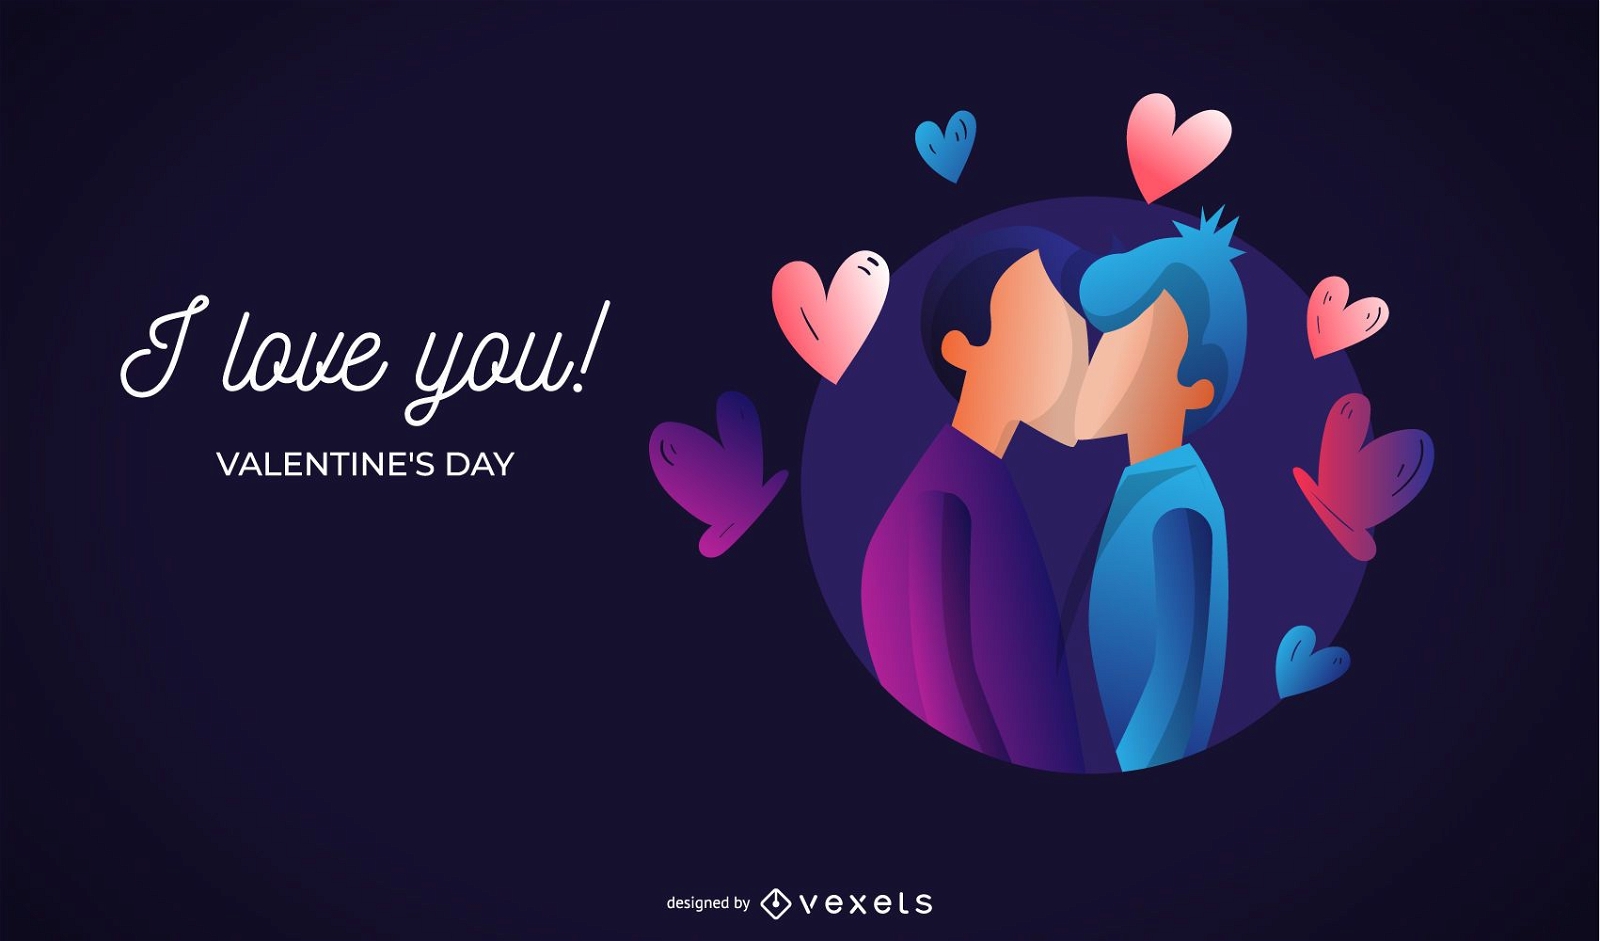 I Love You! Valentine's Day Illustration